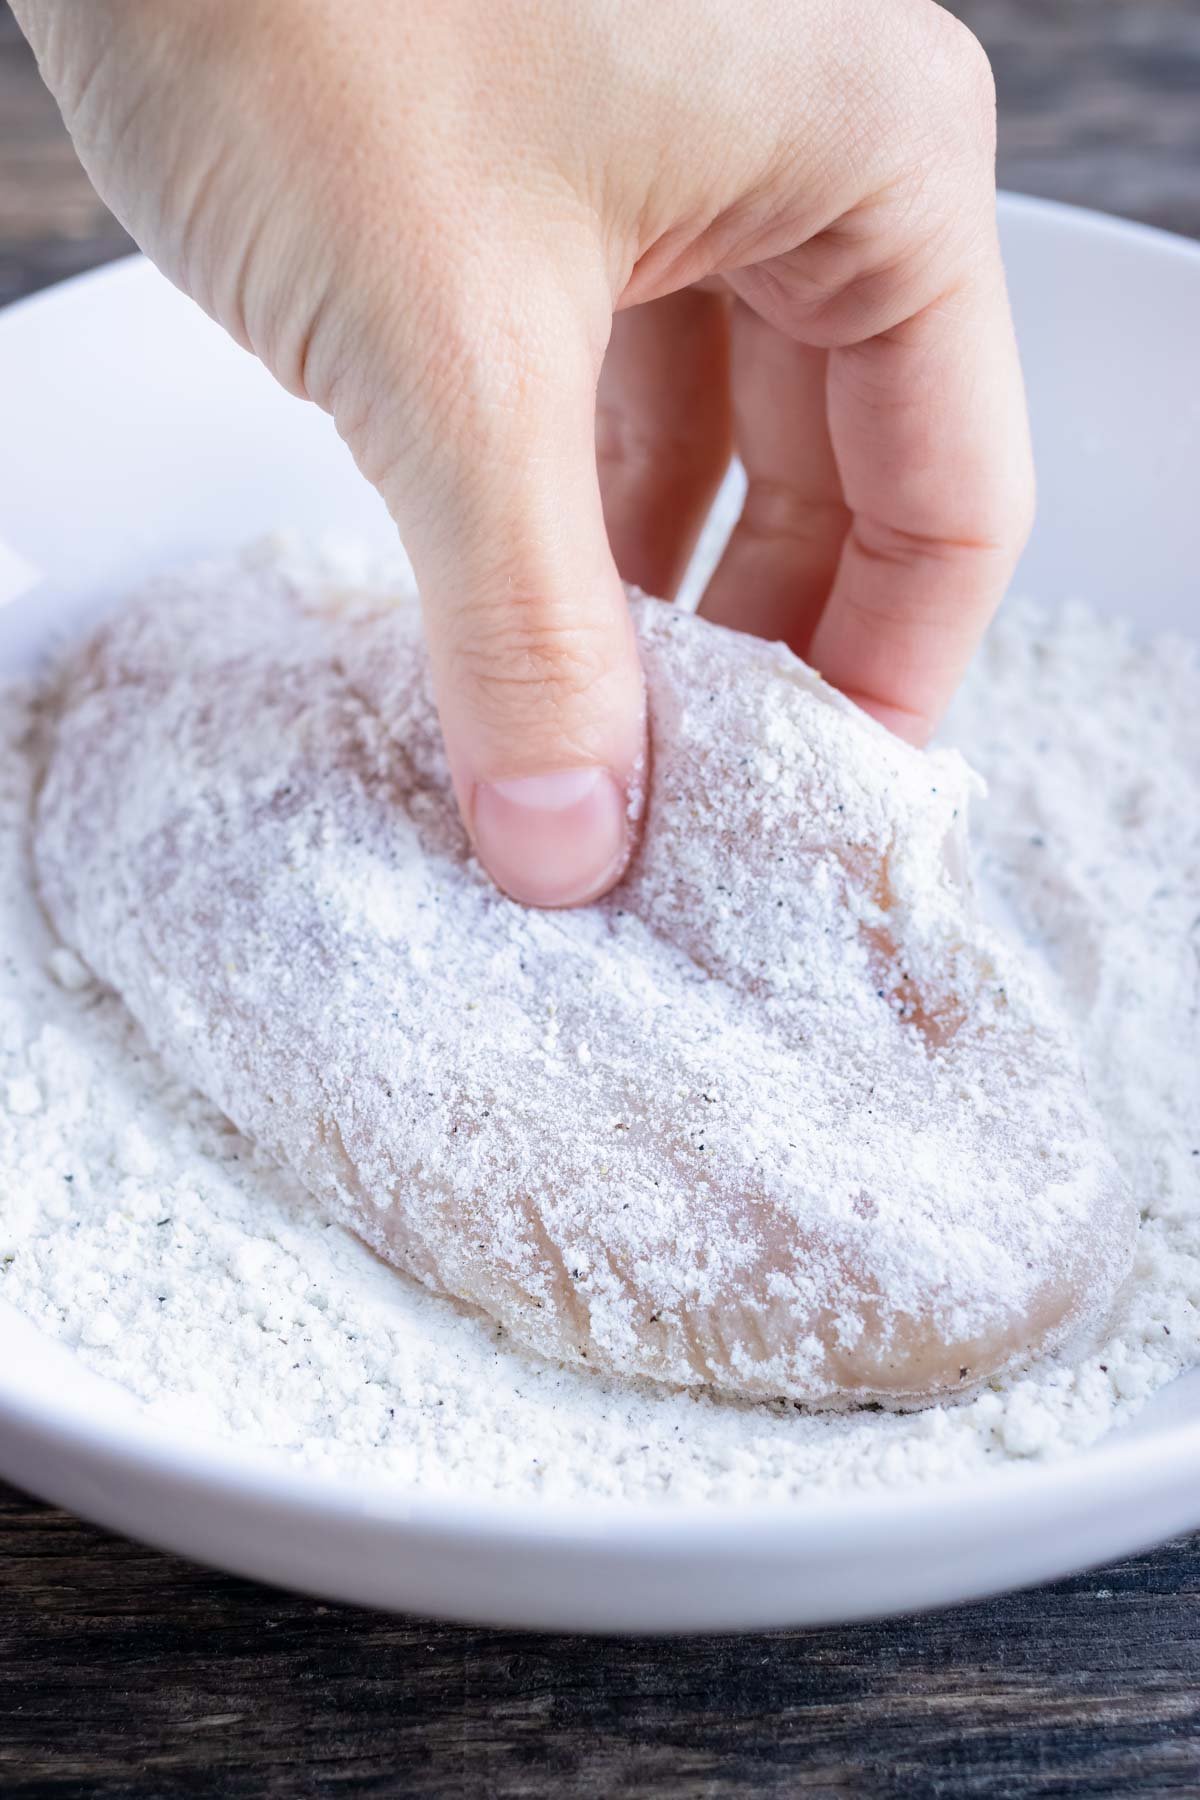 A hand dredging a chicken breast in flour.